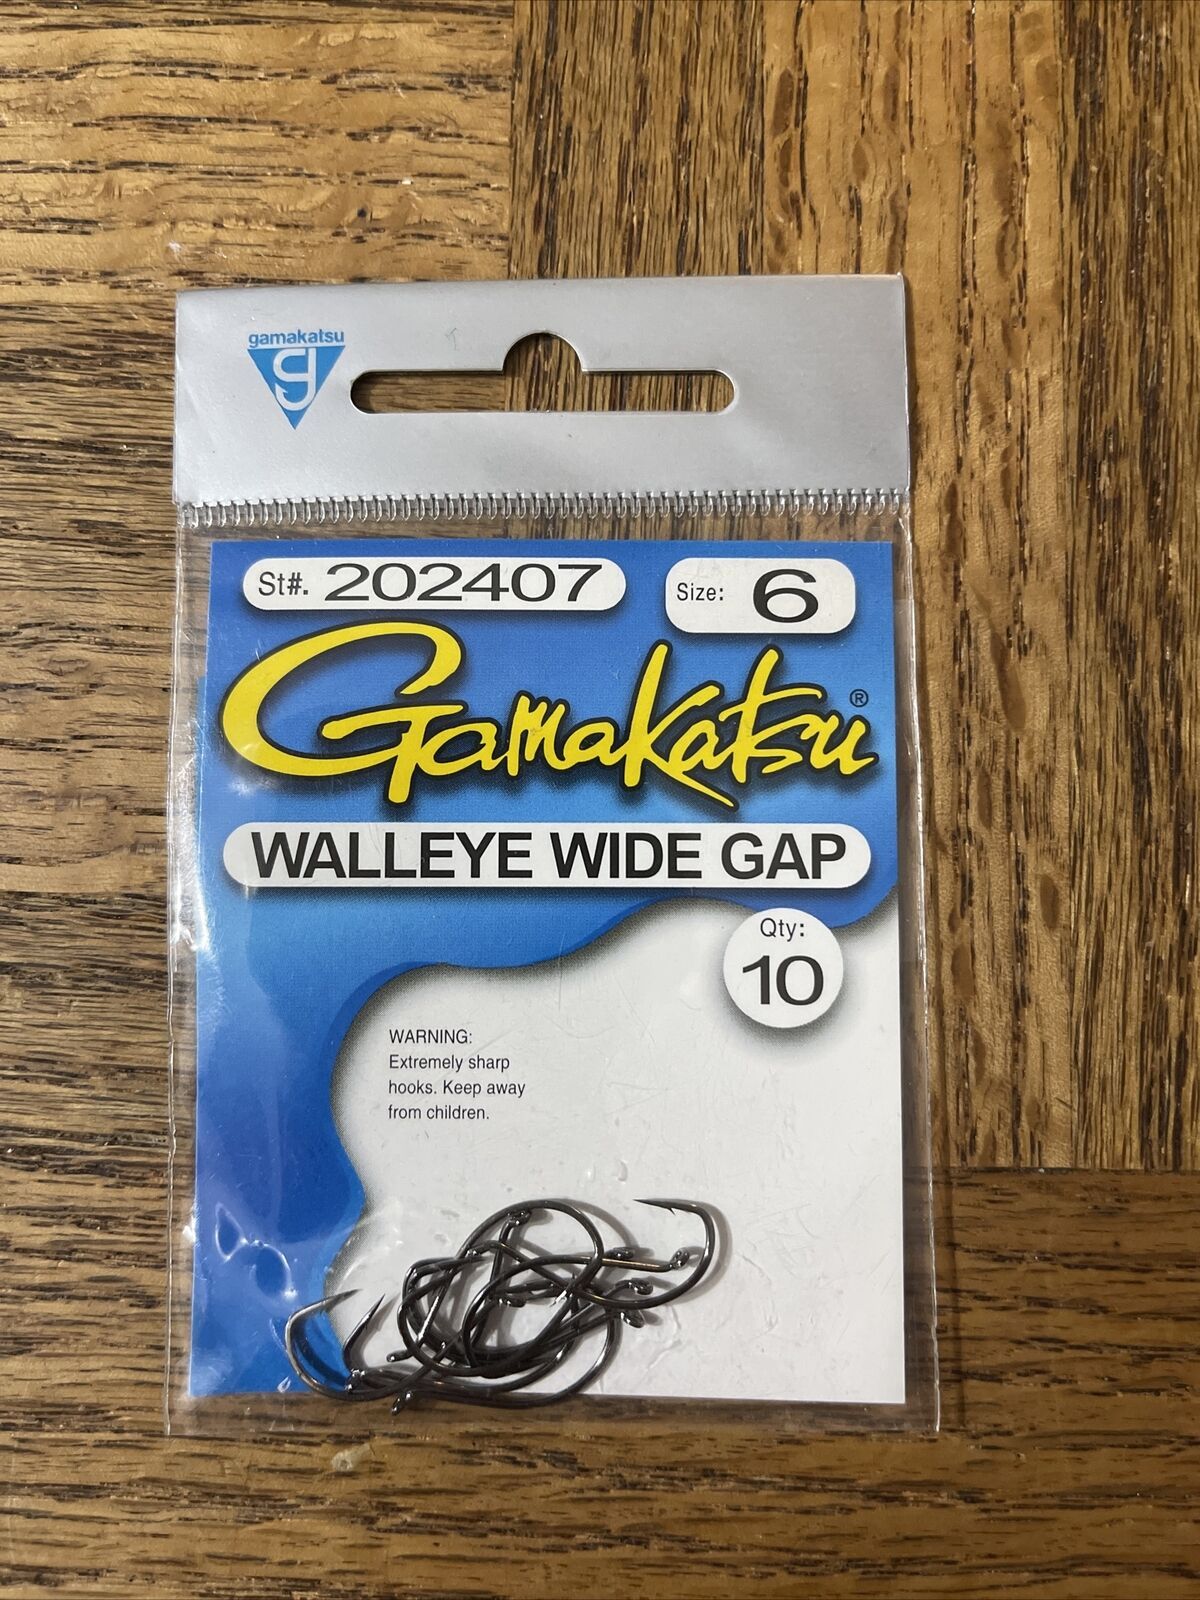 Gamakatsu Walleye Wide Gap Hook Size 6